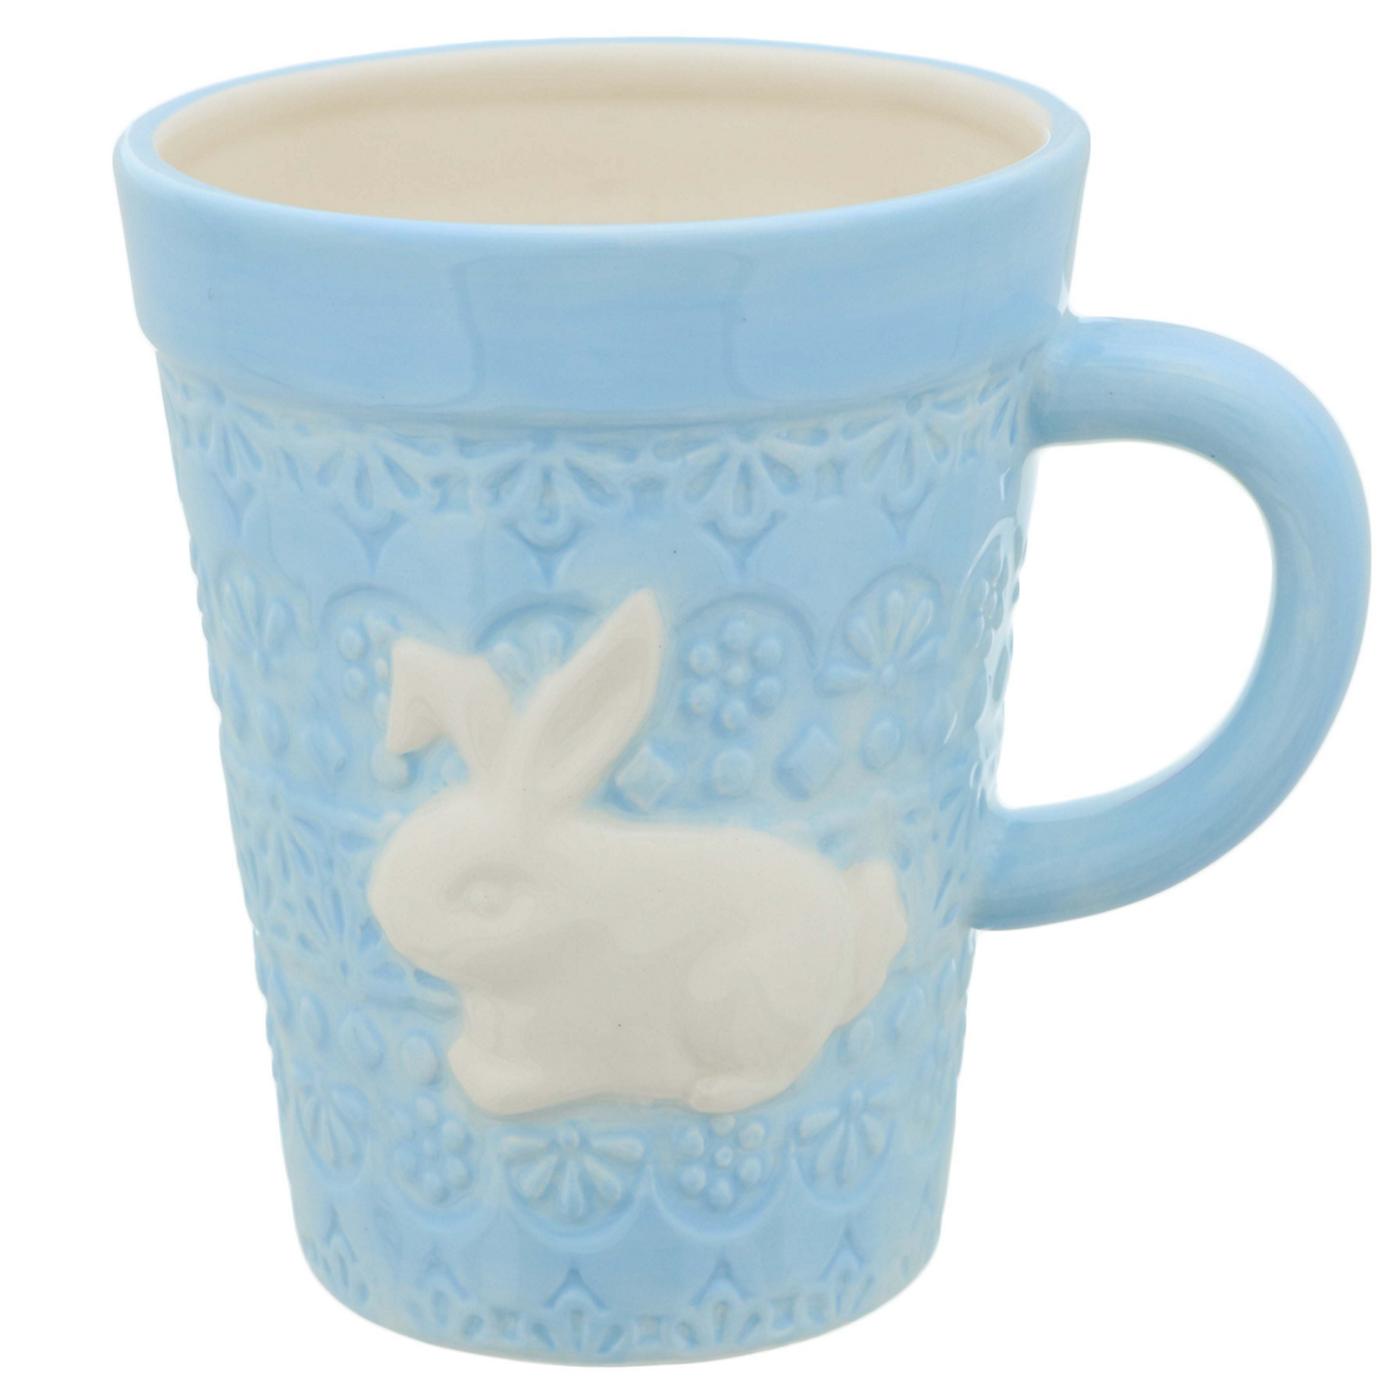 Haven & Key Ceramic Easter Mug Assorted Colors; image 1 of 2